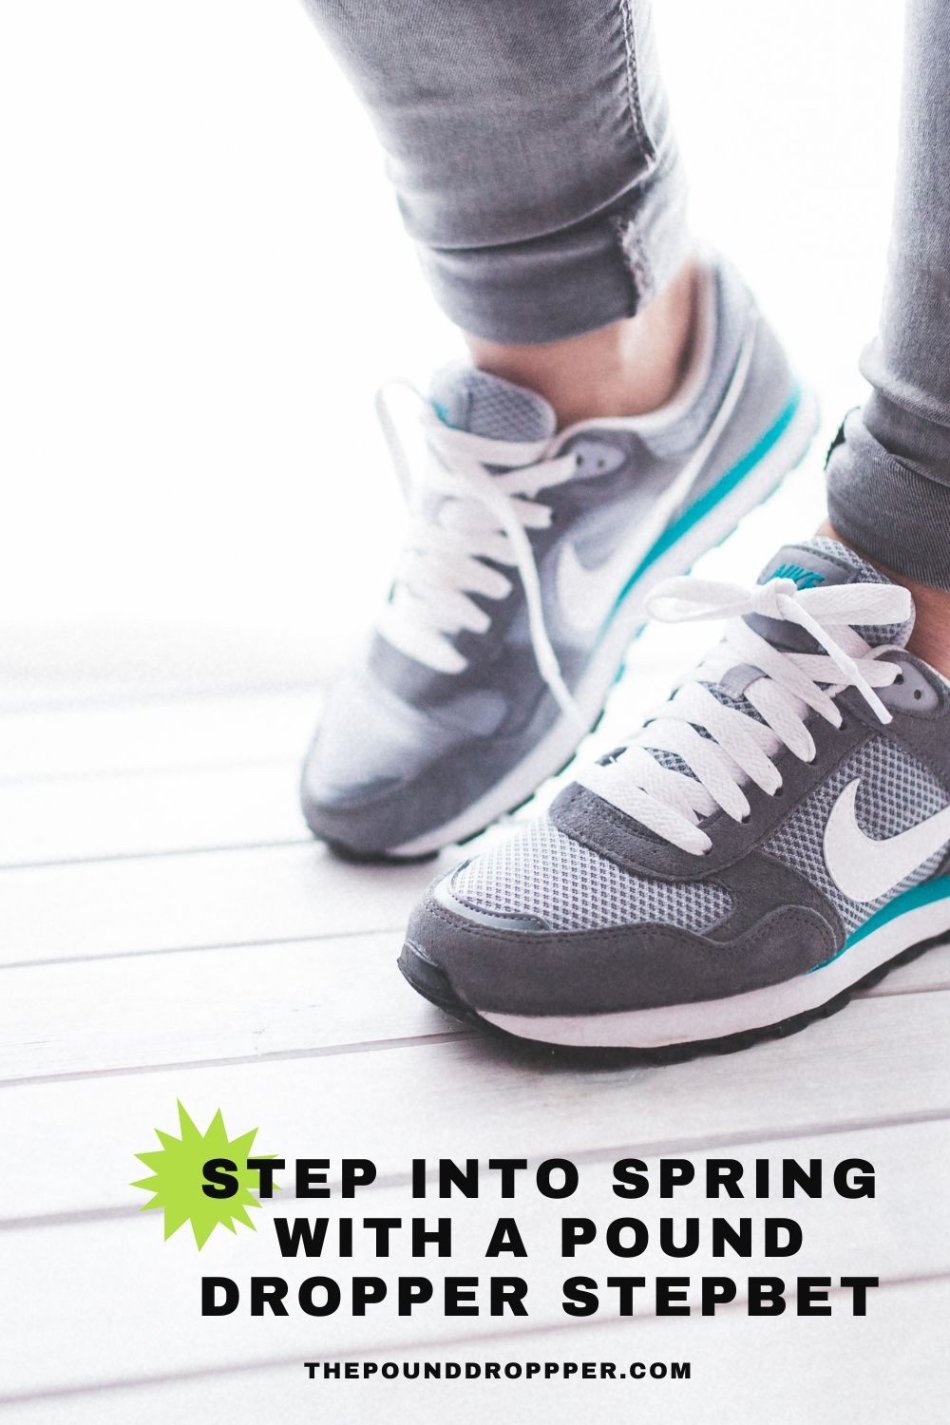 Step into Spring with a Pound Dropper StepBet via @pounddropper